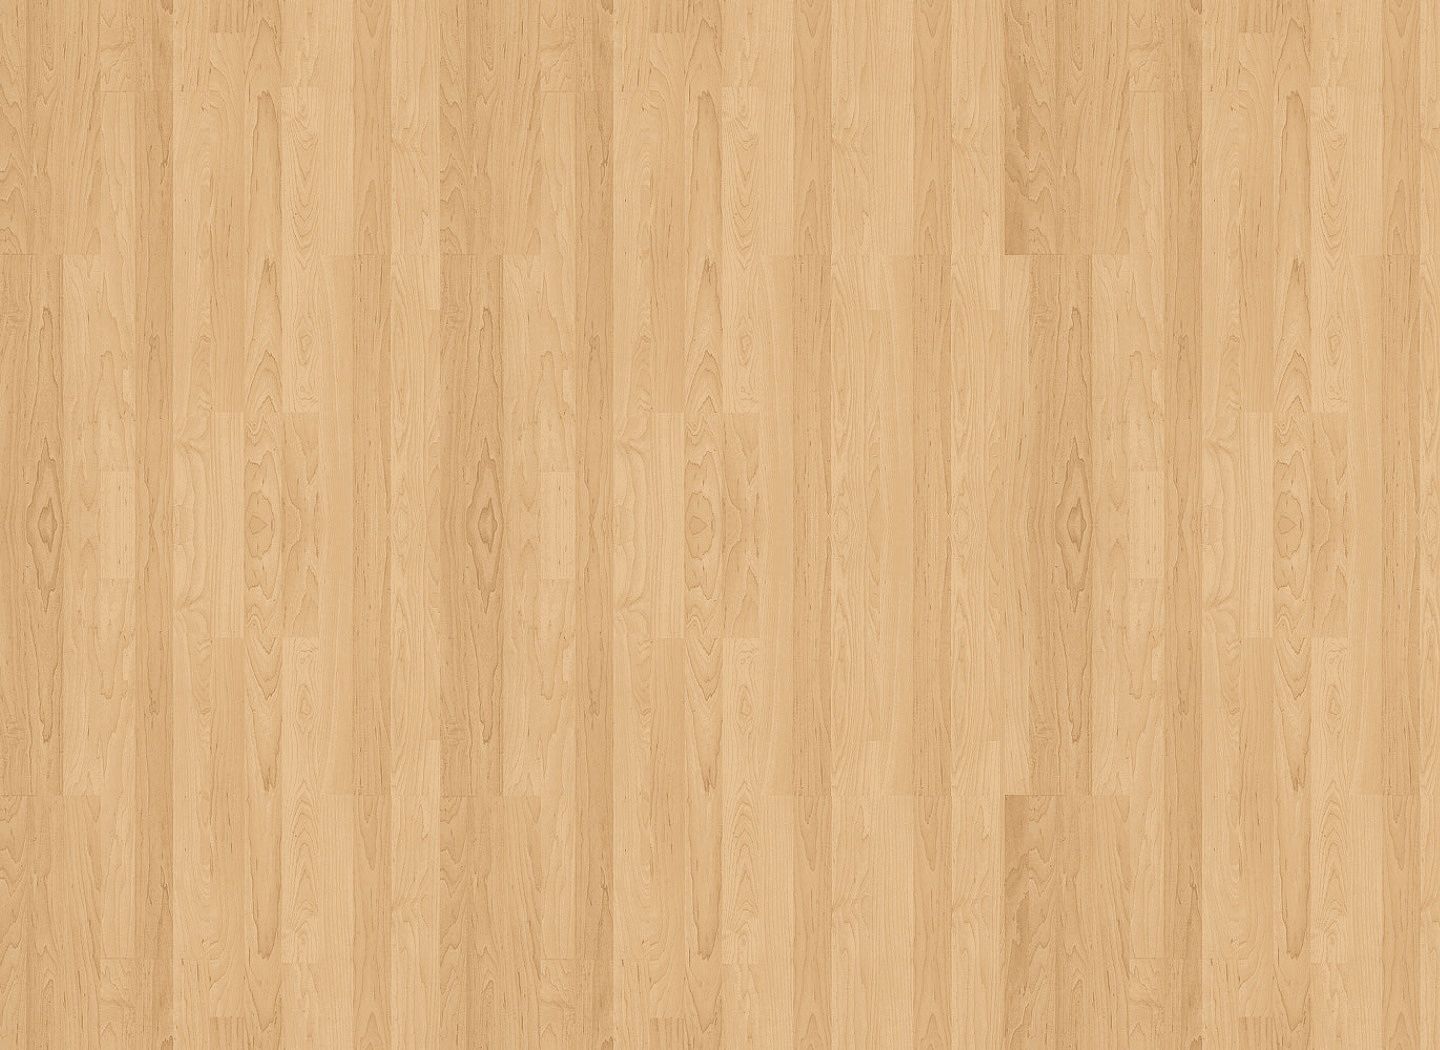 Wood Wallpaper by stenosis on DeviantArt